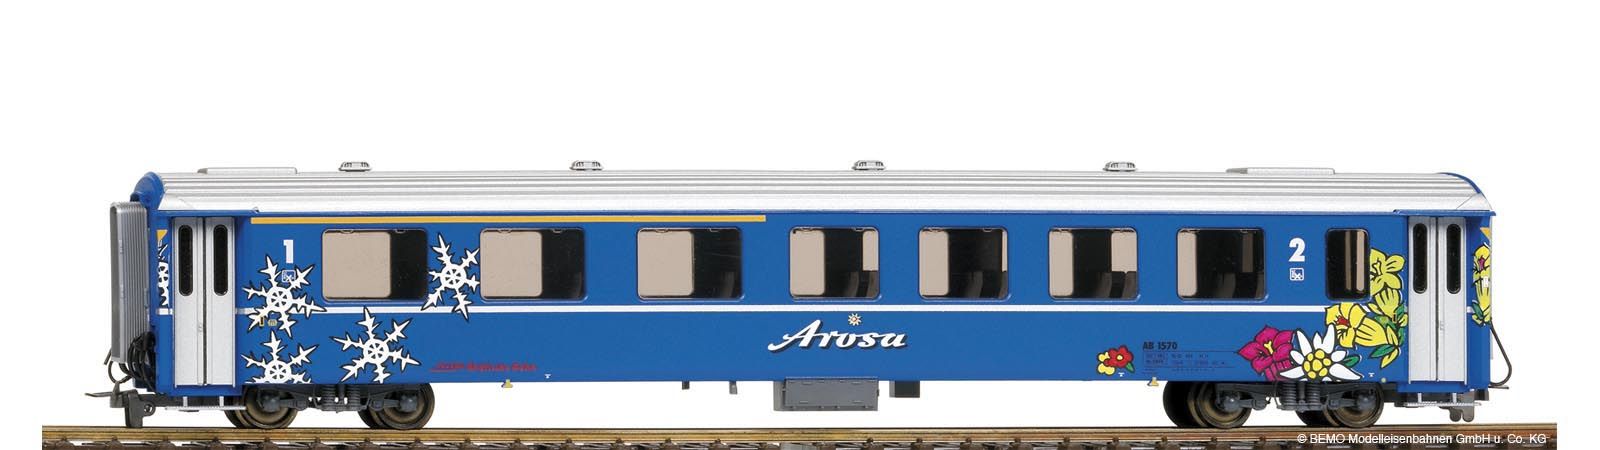 3241140 Bemo - Personenwagen RhB AB 1570 EW II Arosa Express - Spur H0m